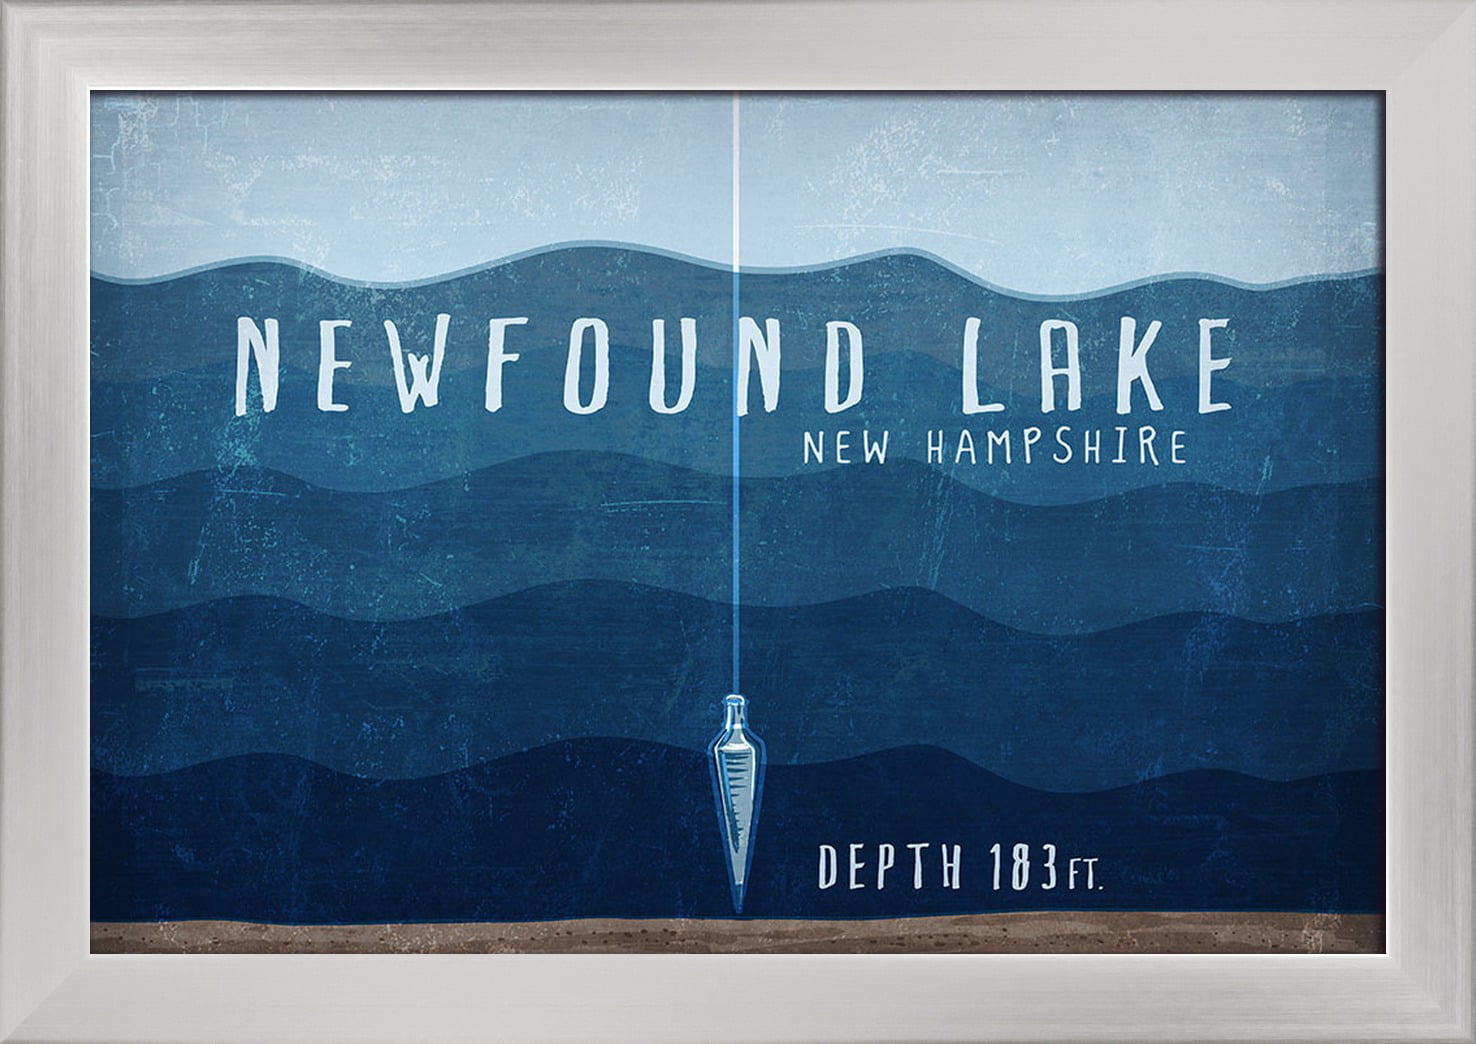 12x18 Aluminum Wall Sign, Wall Decor Ready to Hang New Hampshire Lake Essentials Lake Depth Newfound Lake